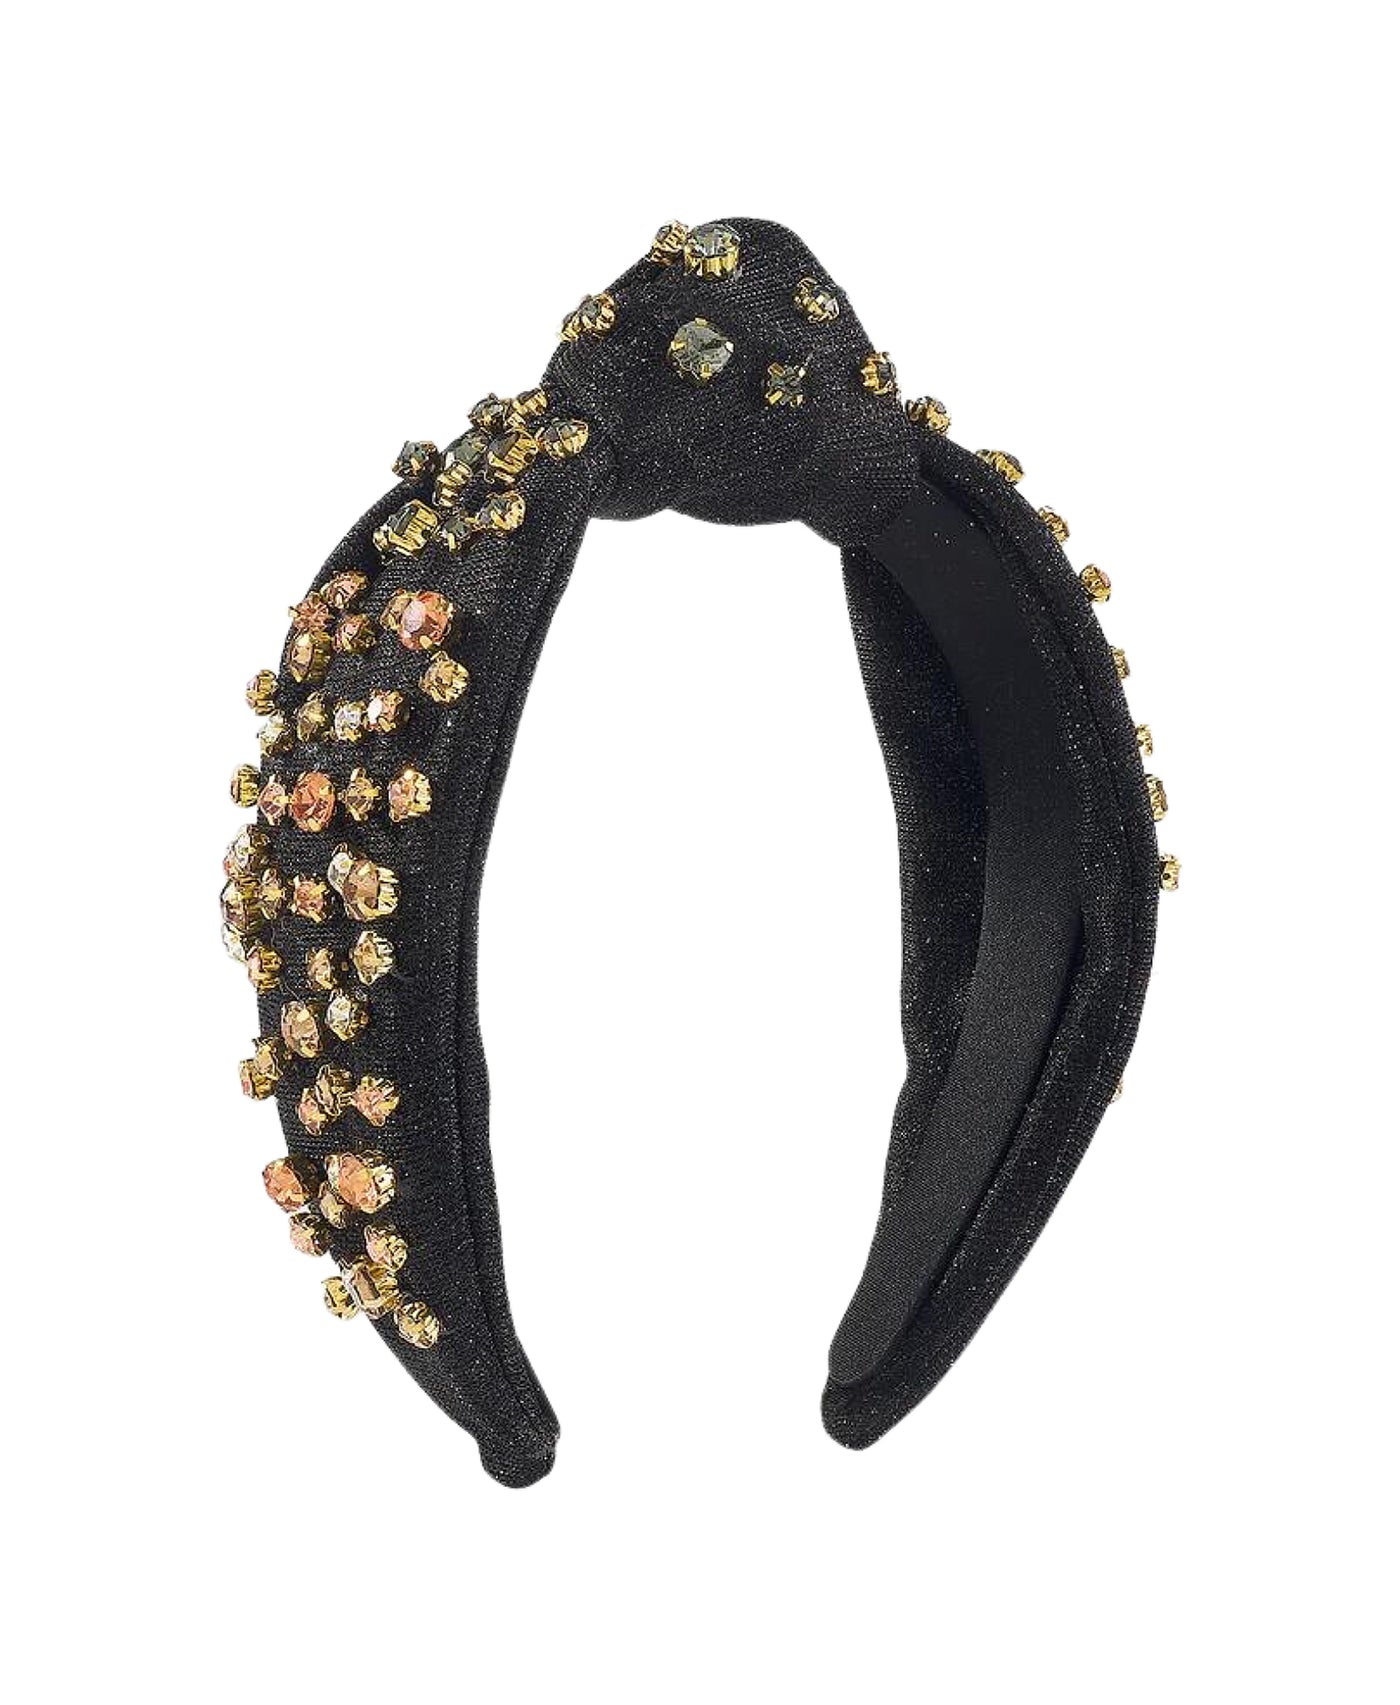 Shimmer Knotted Headband w/ Rhinestones image 1